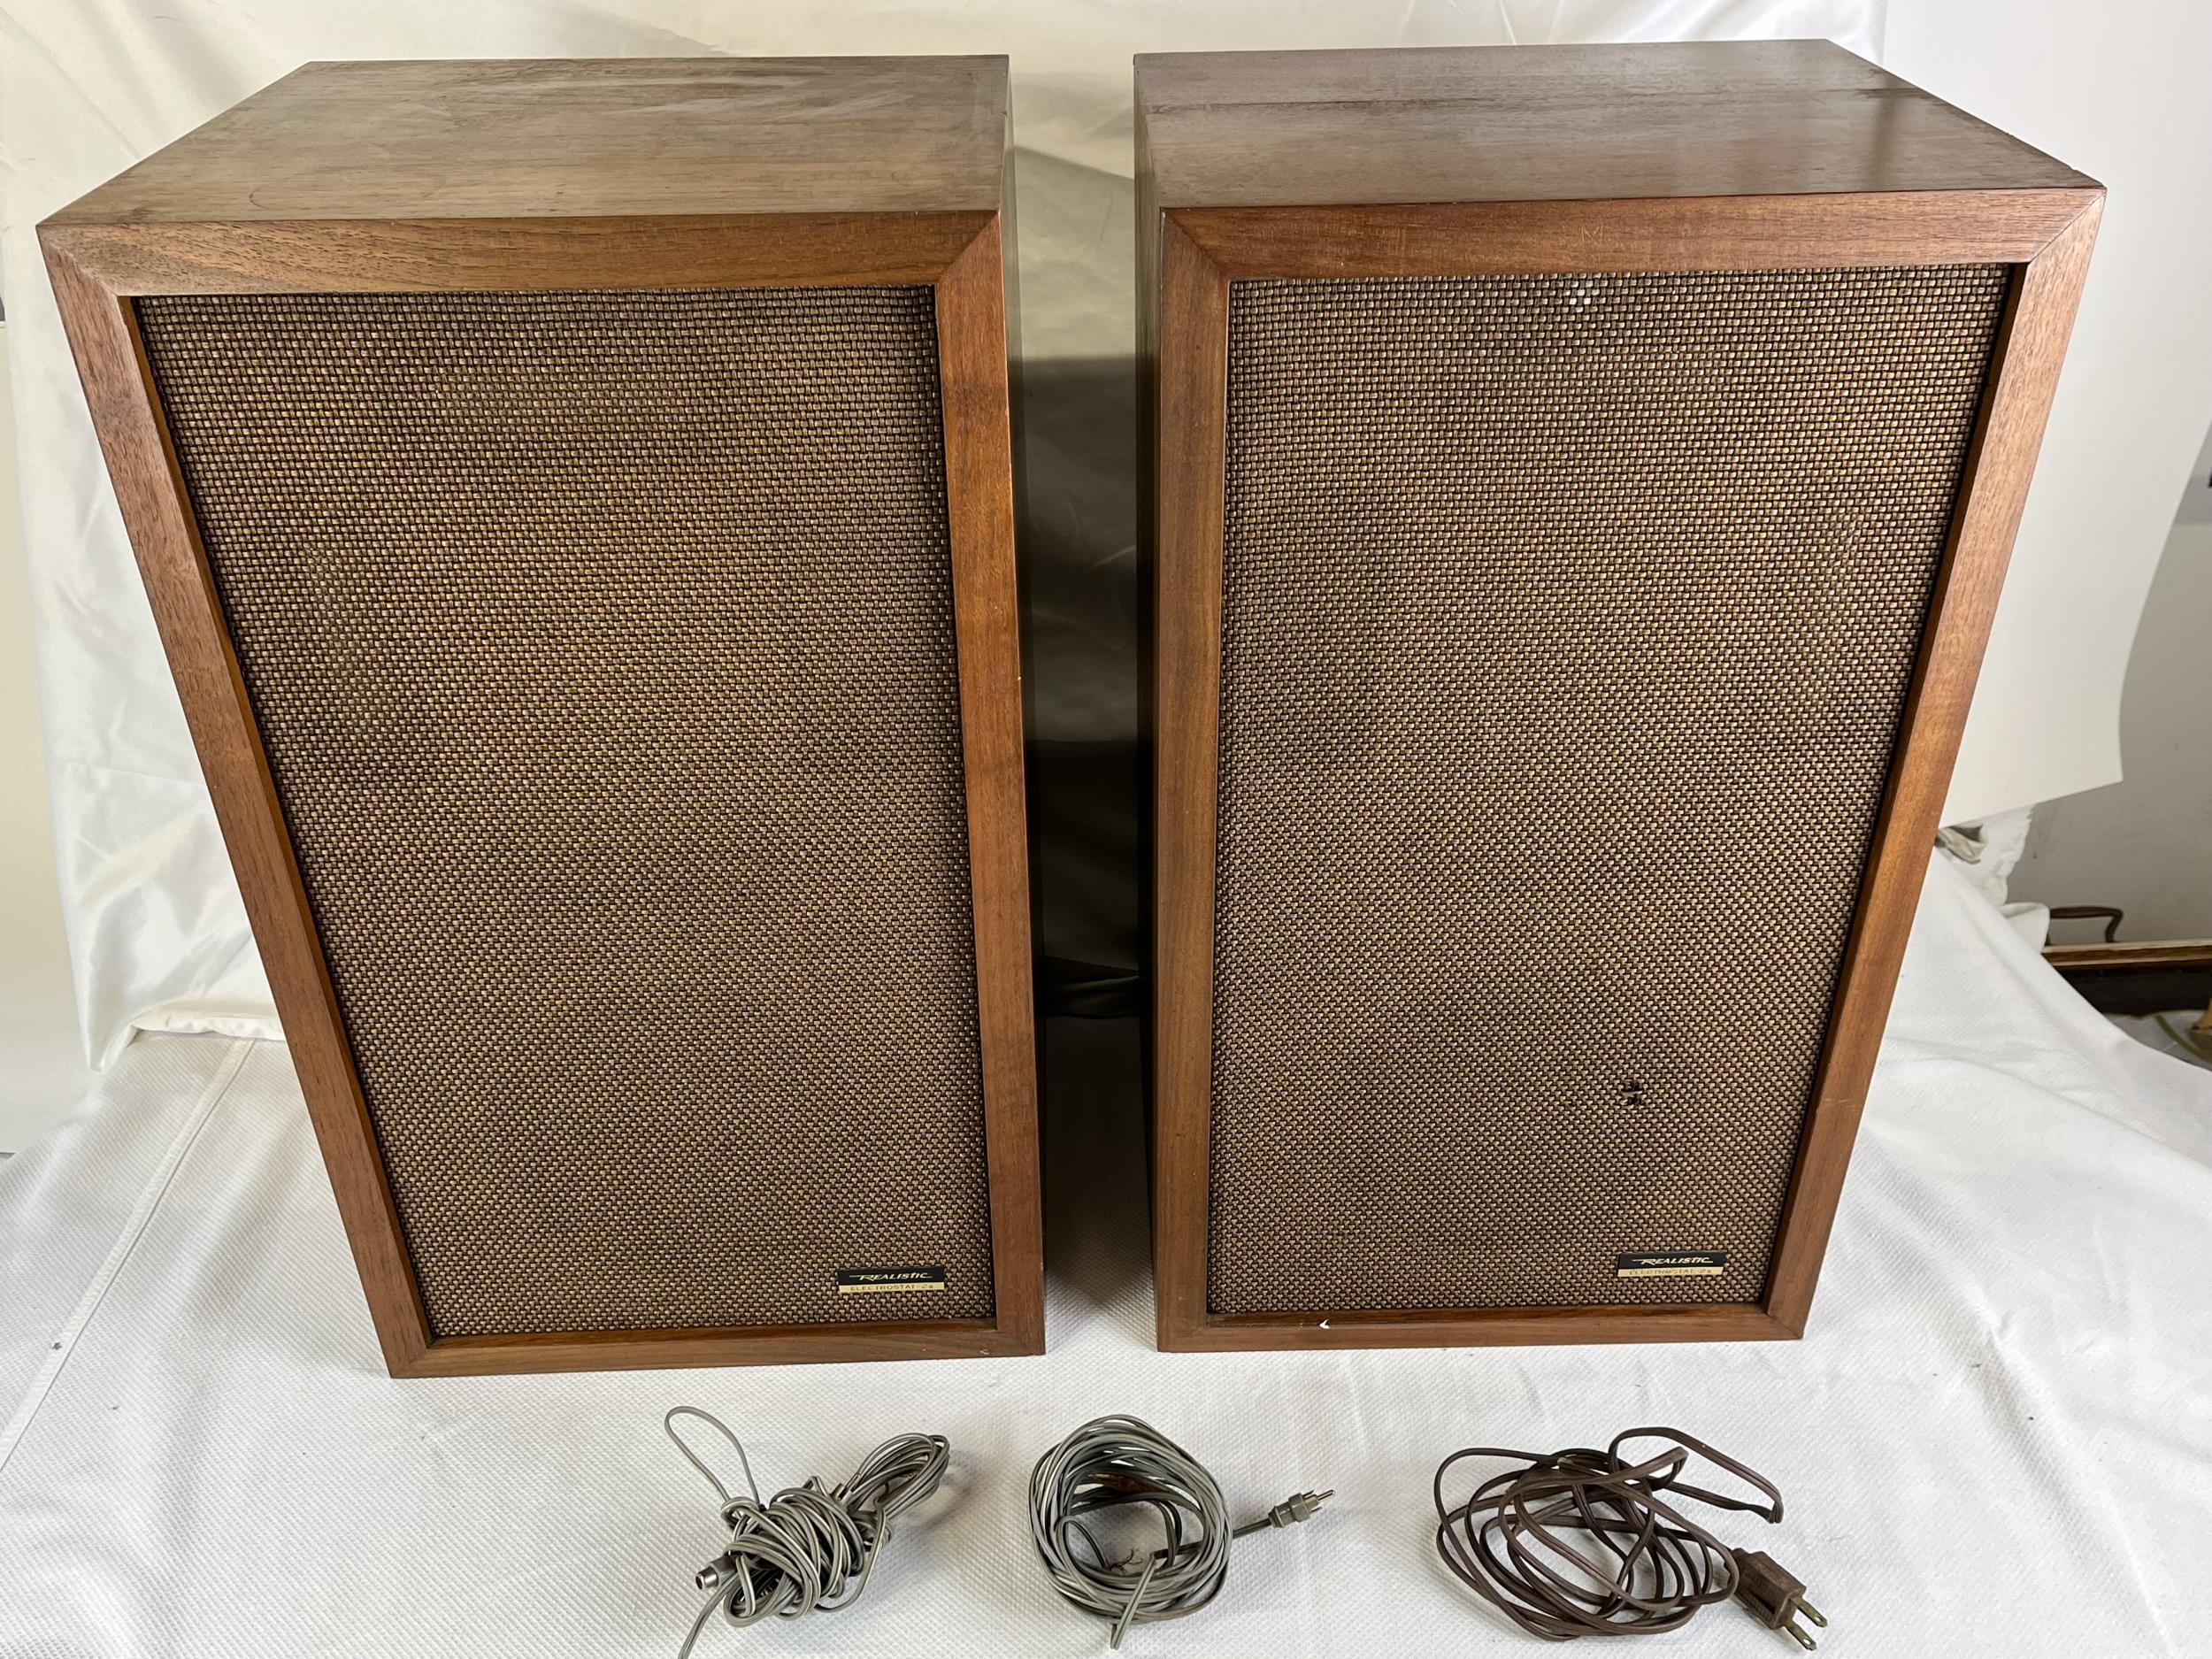 A pair of vintage Realistic “Electrostat” 1970 speakers.